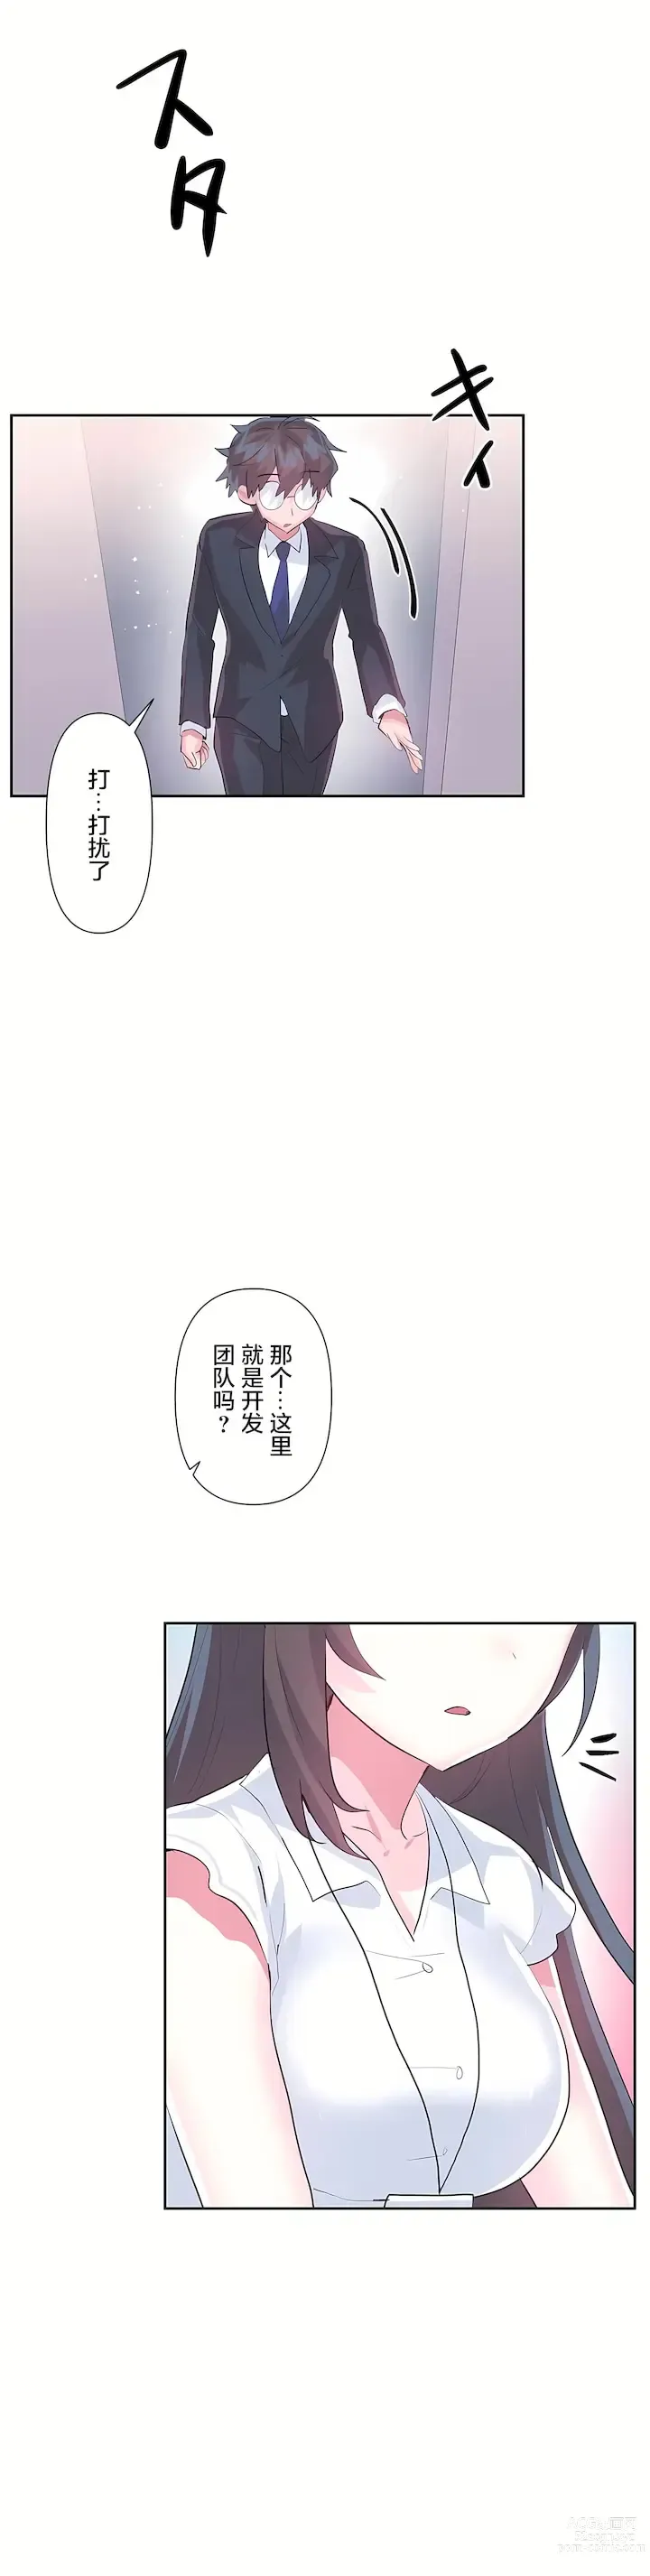 Page 13 of manga 爱爱仙境 LoveLove Wonder Land -online- 46-82